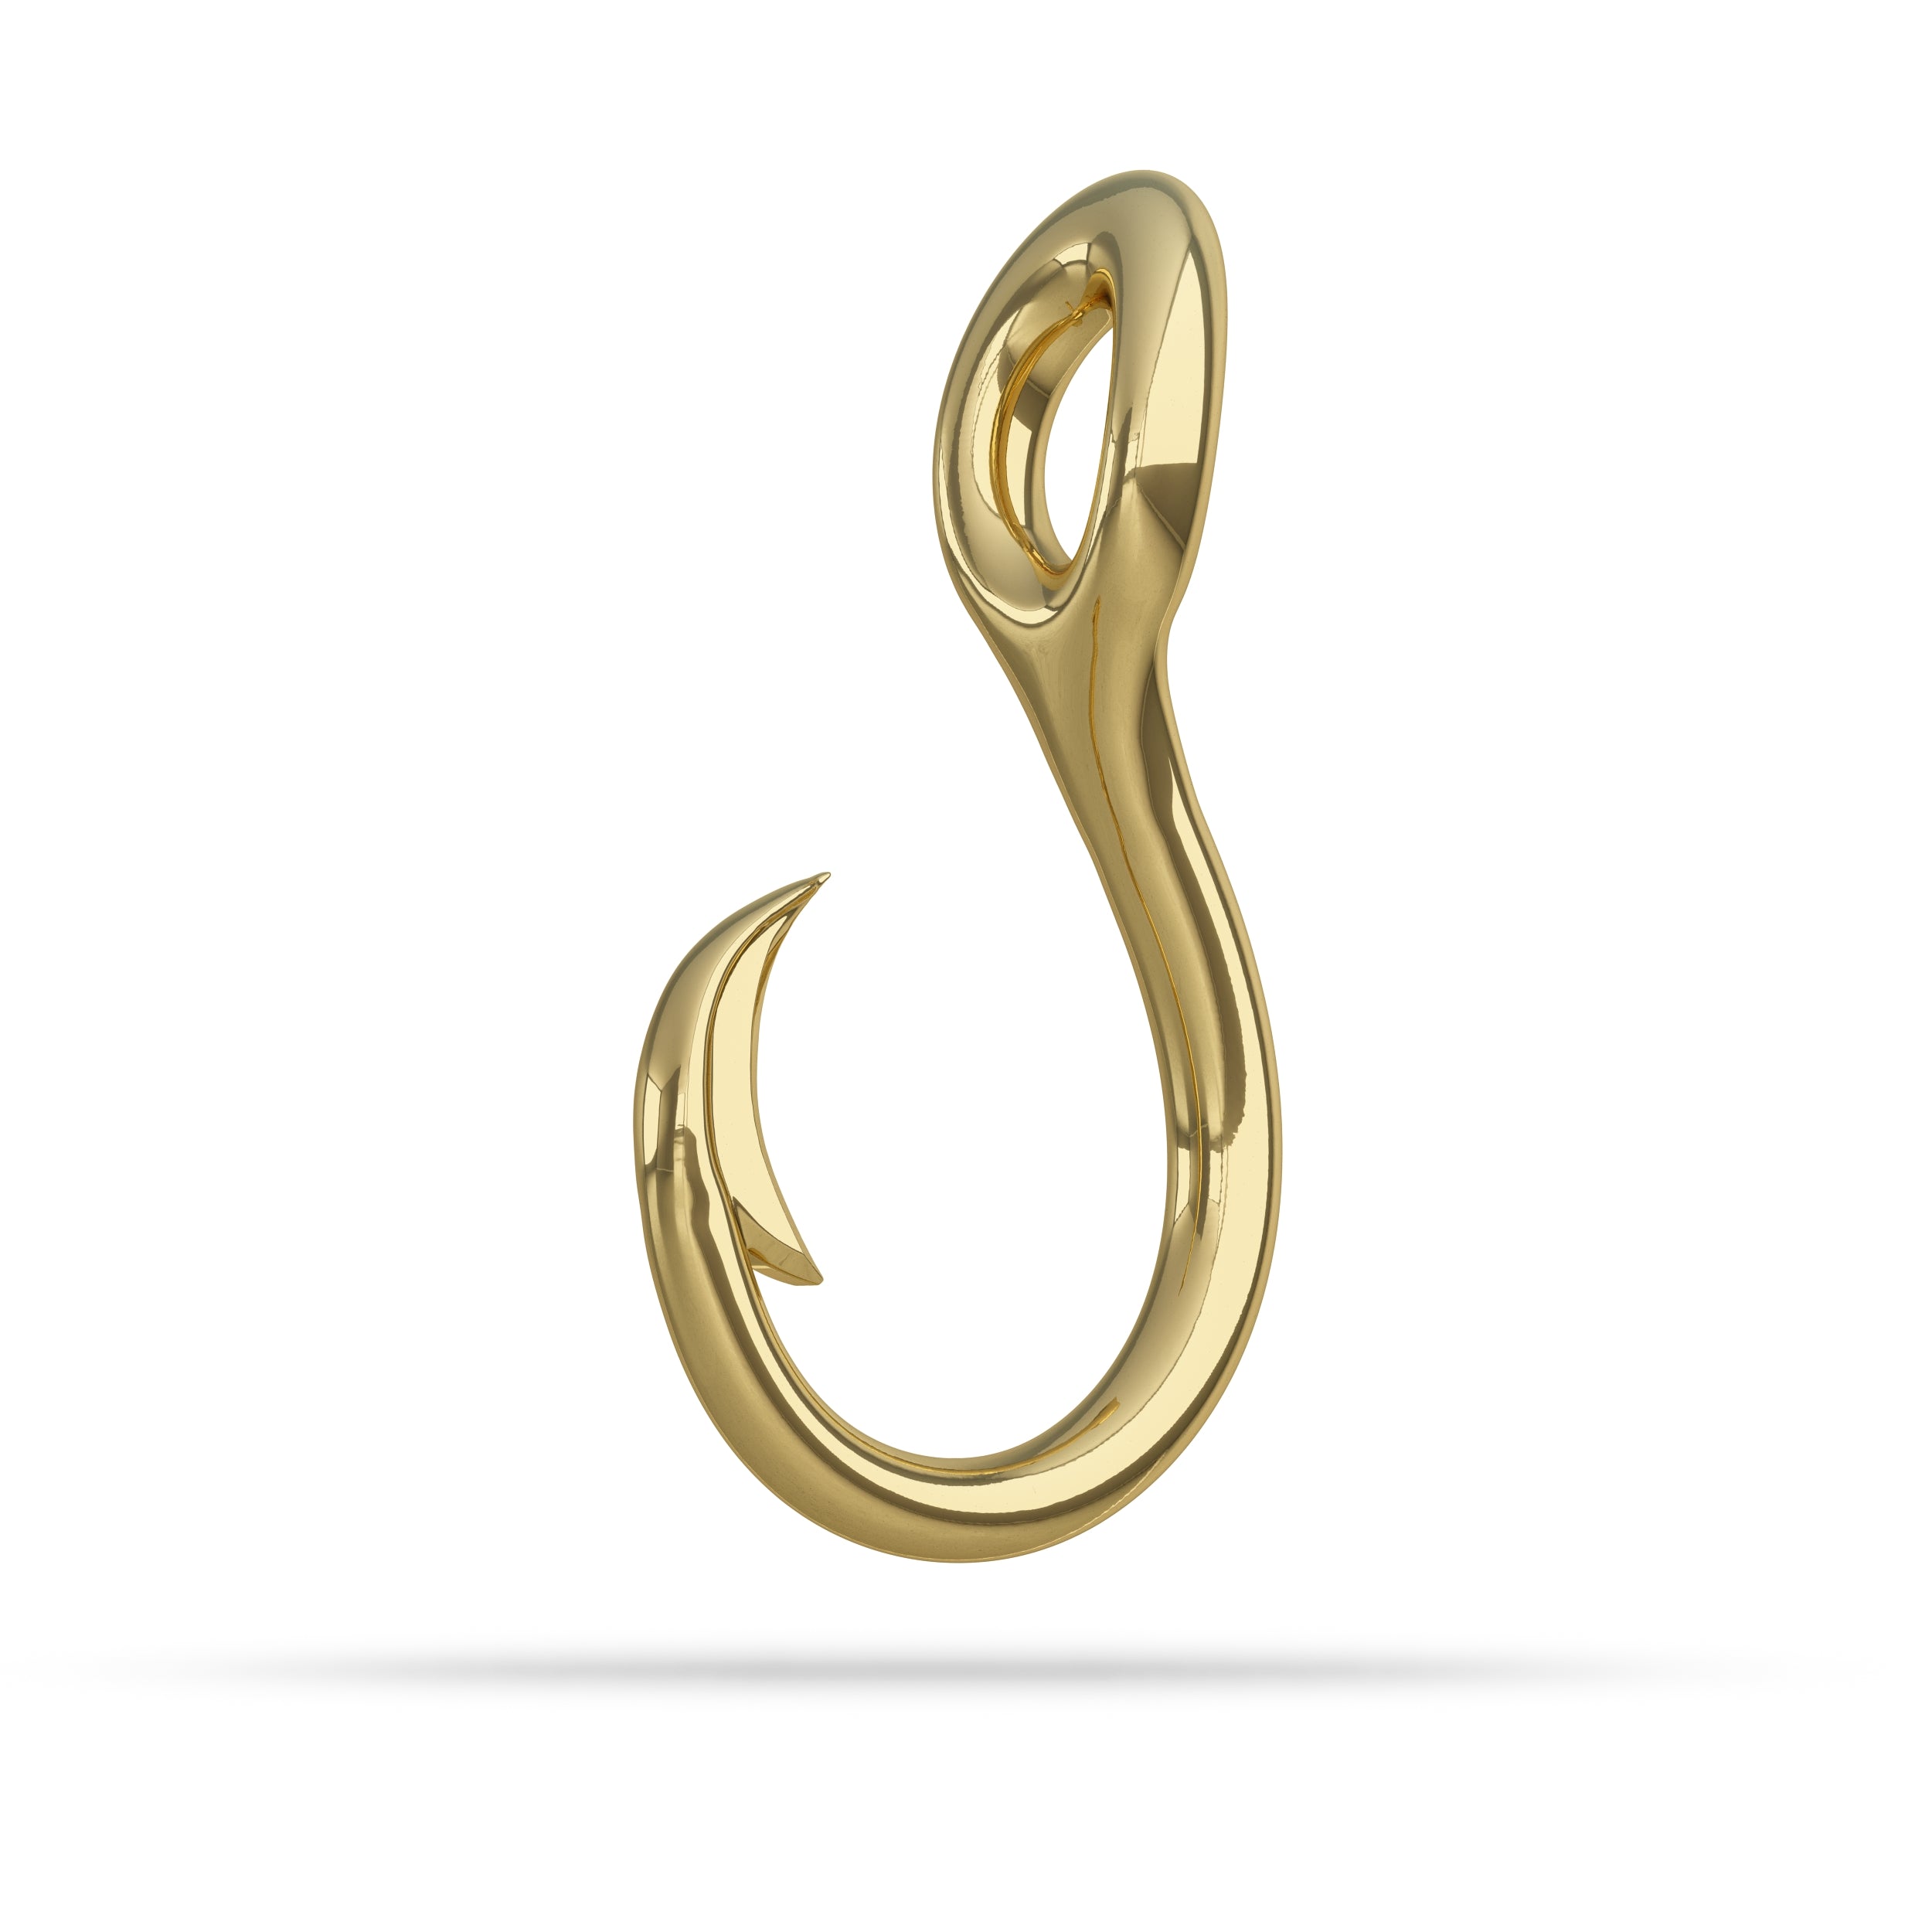 Small Gold fishing Circle hook pendant by Nautical Treasure